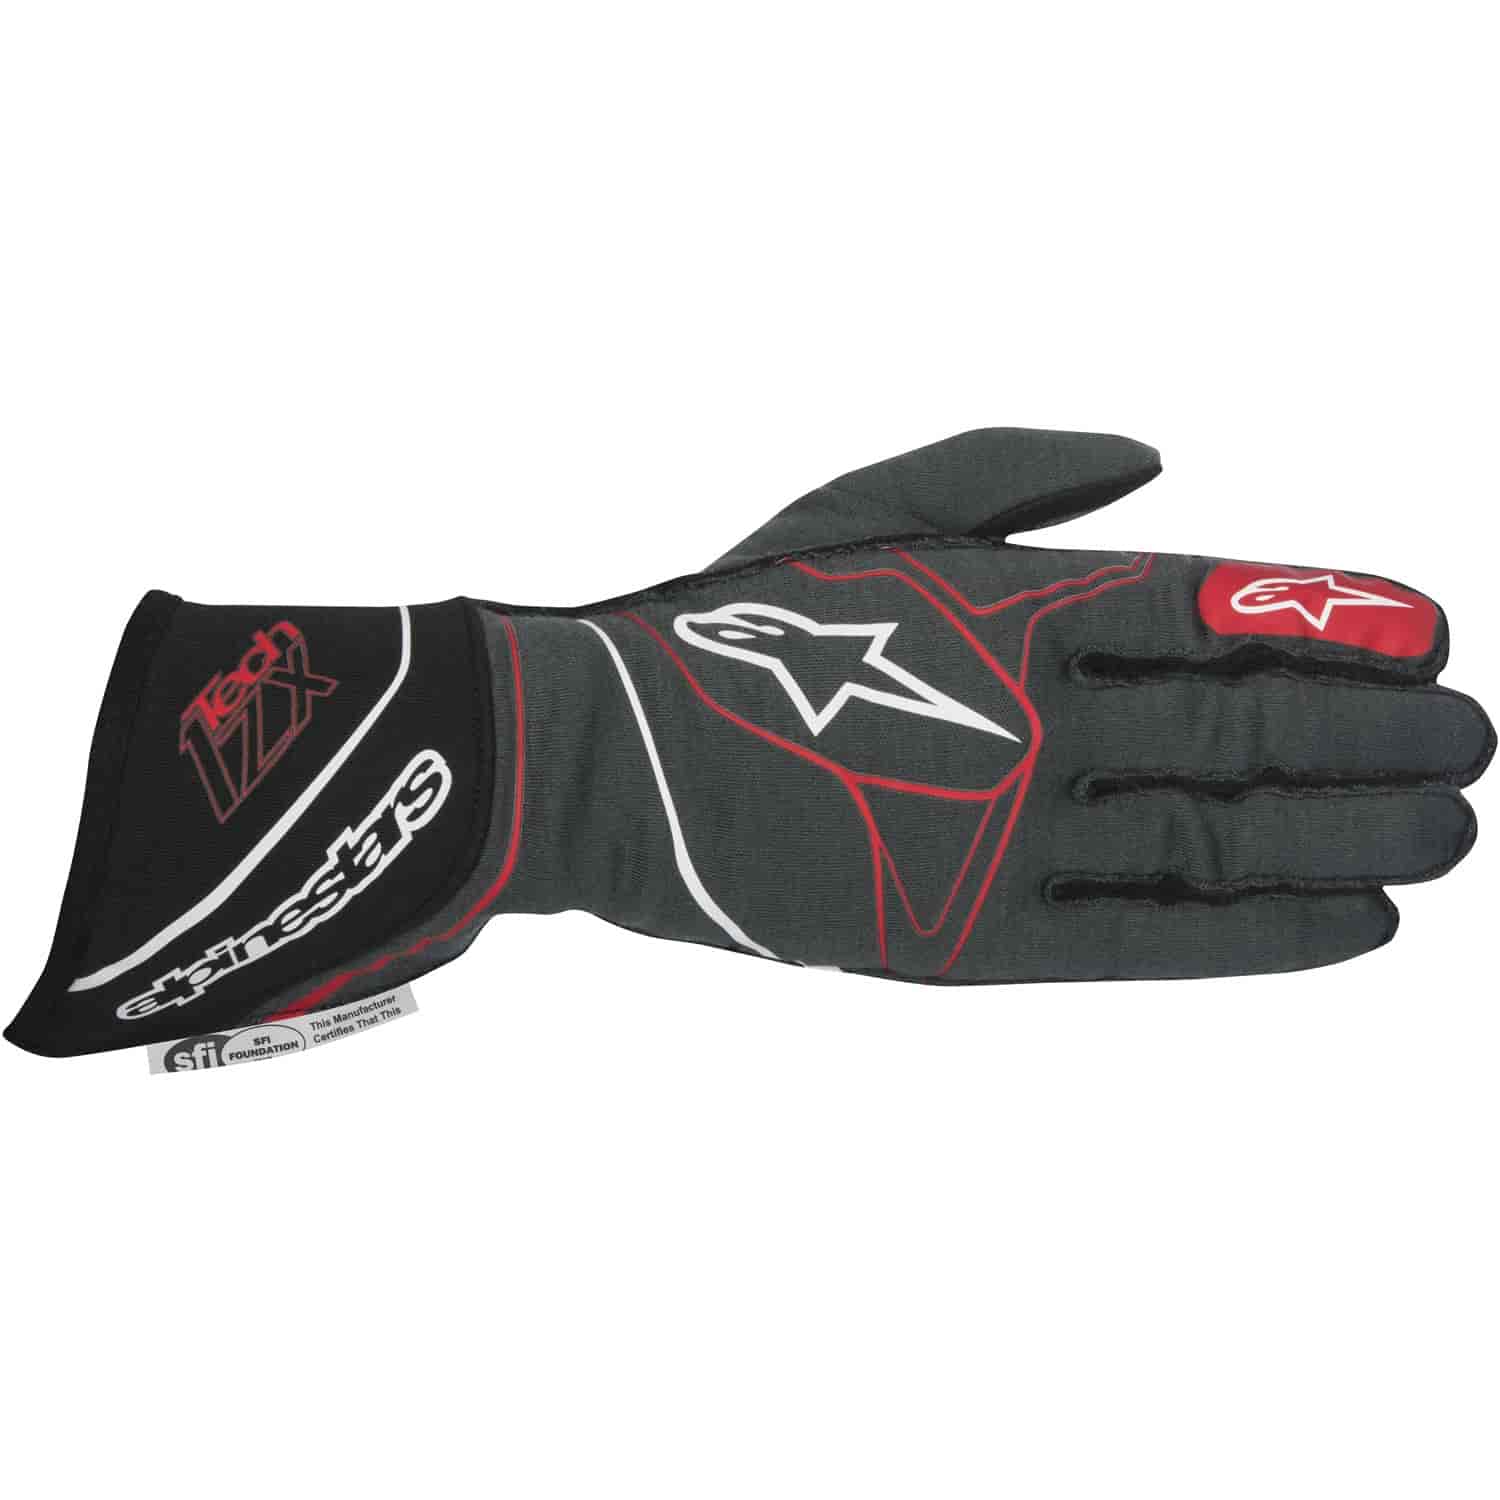 Tech 1-ZX Glove Anthracite/Black/Red SFI 3.3/5